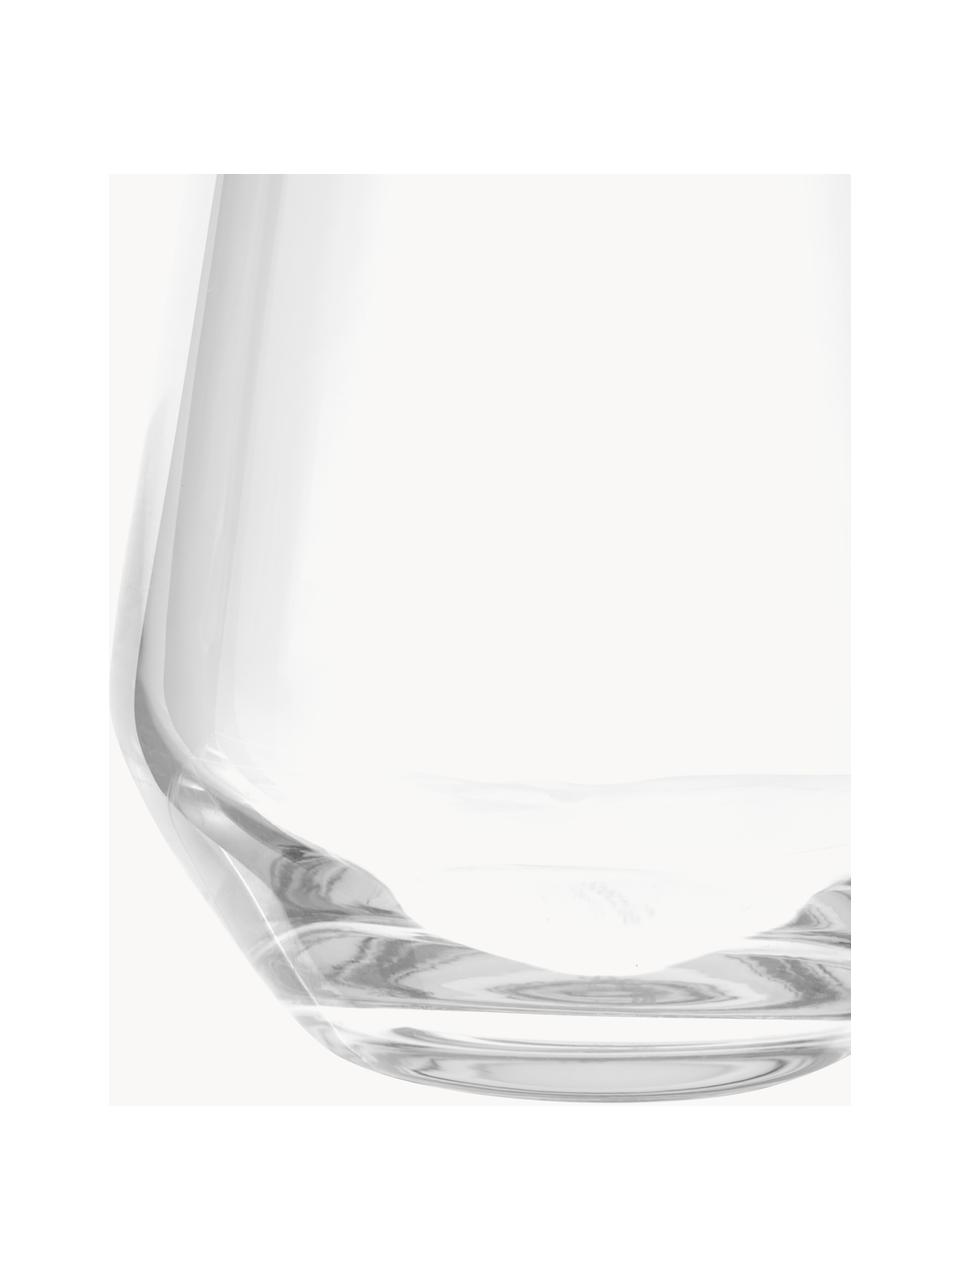 Vasos de cristal Revolution, 6 uds., Cristal, Transparente, Ø 9 x Al 11 cm, 470 ml